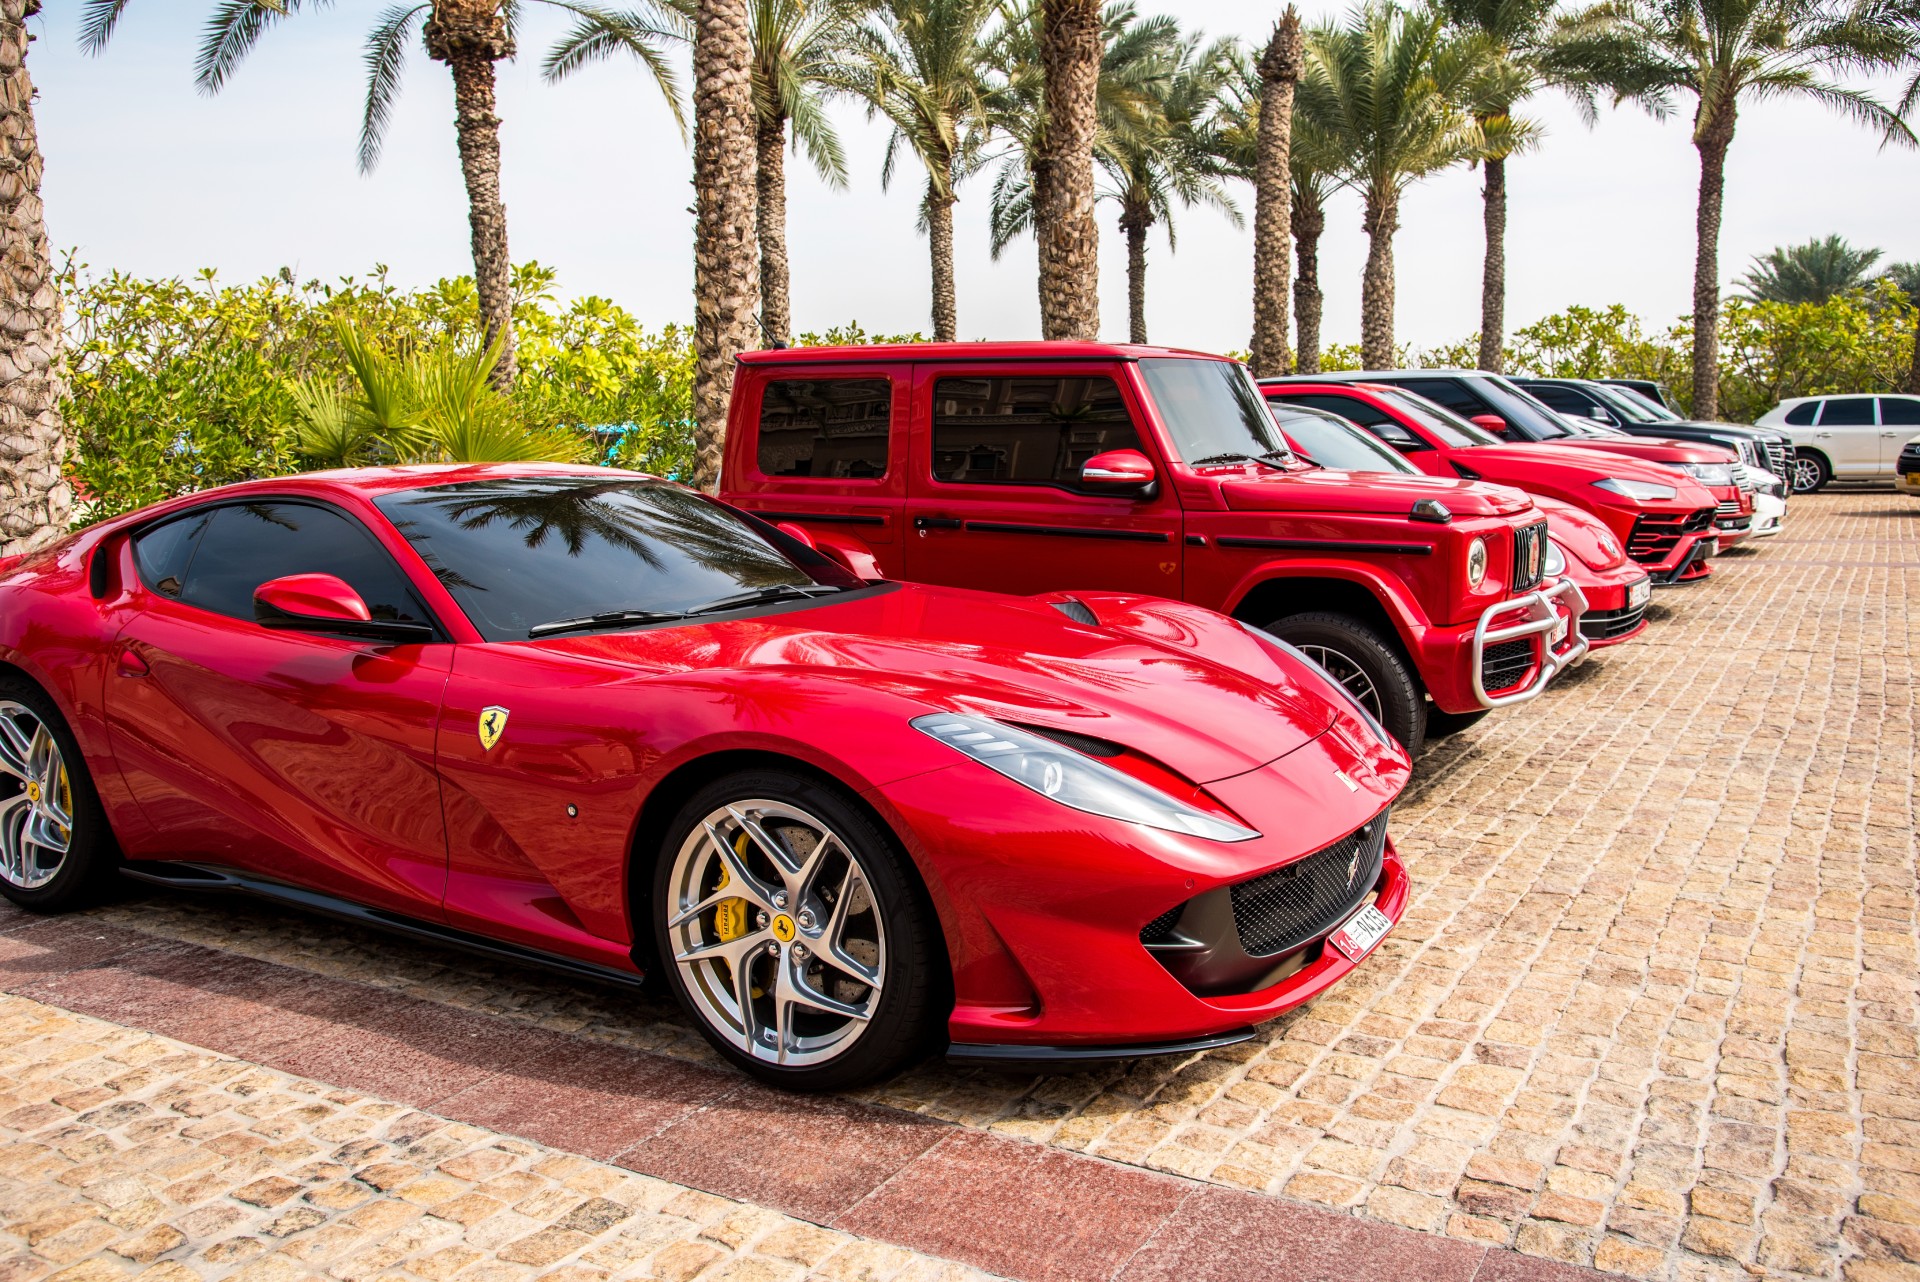 Top 10 over de mest populære biler i Dubai